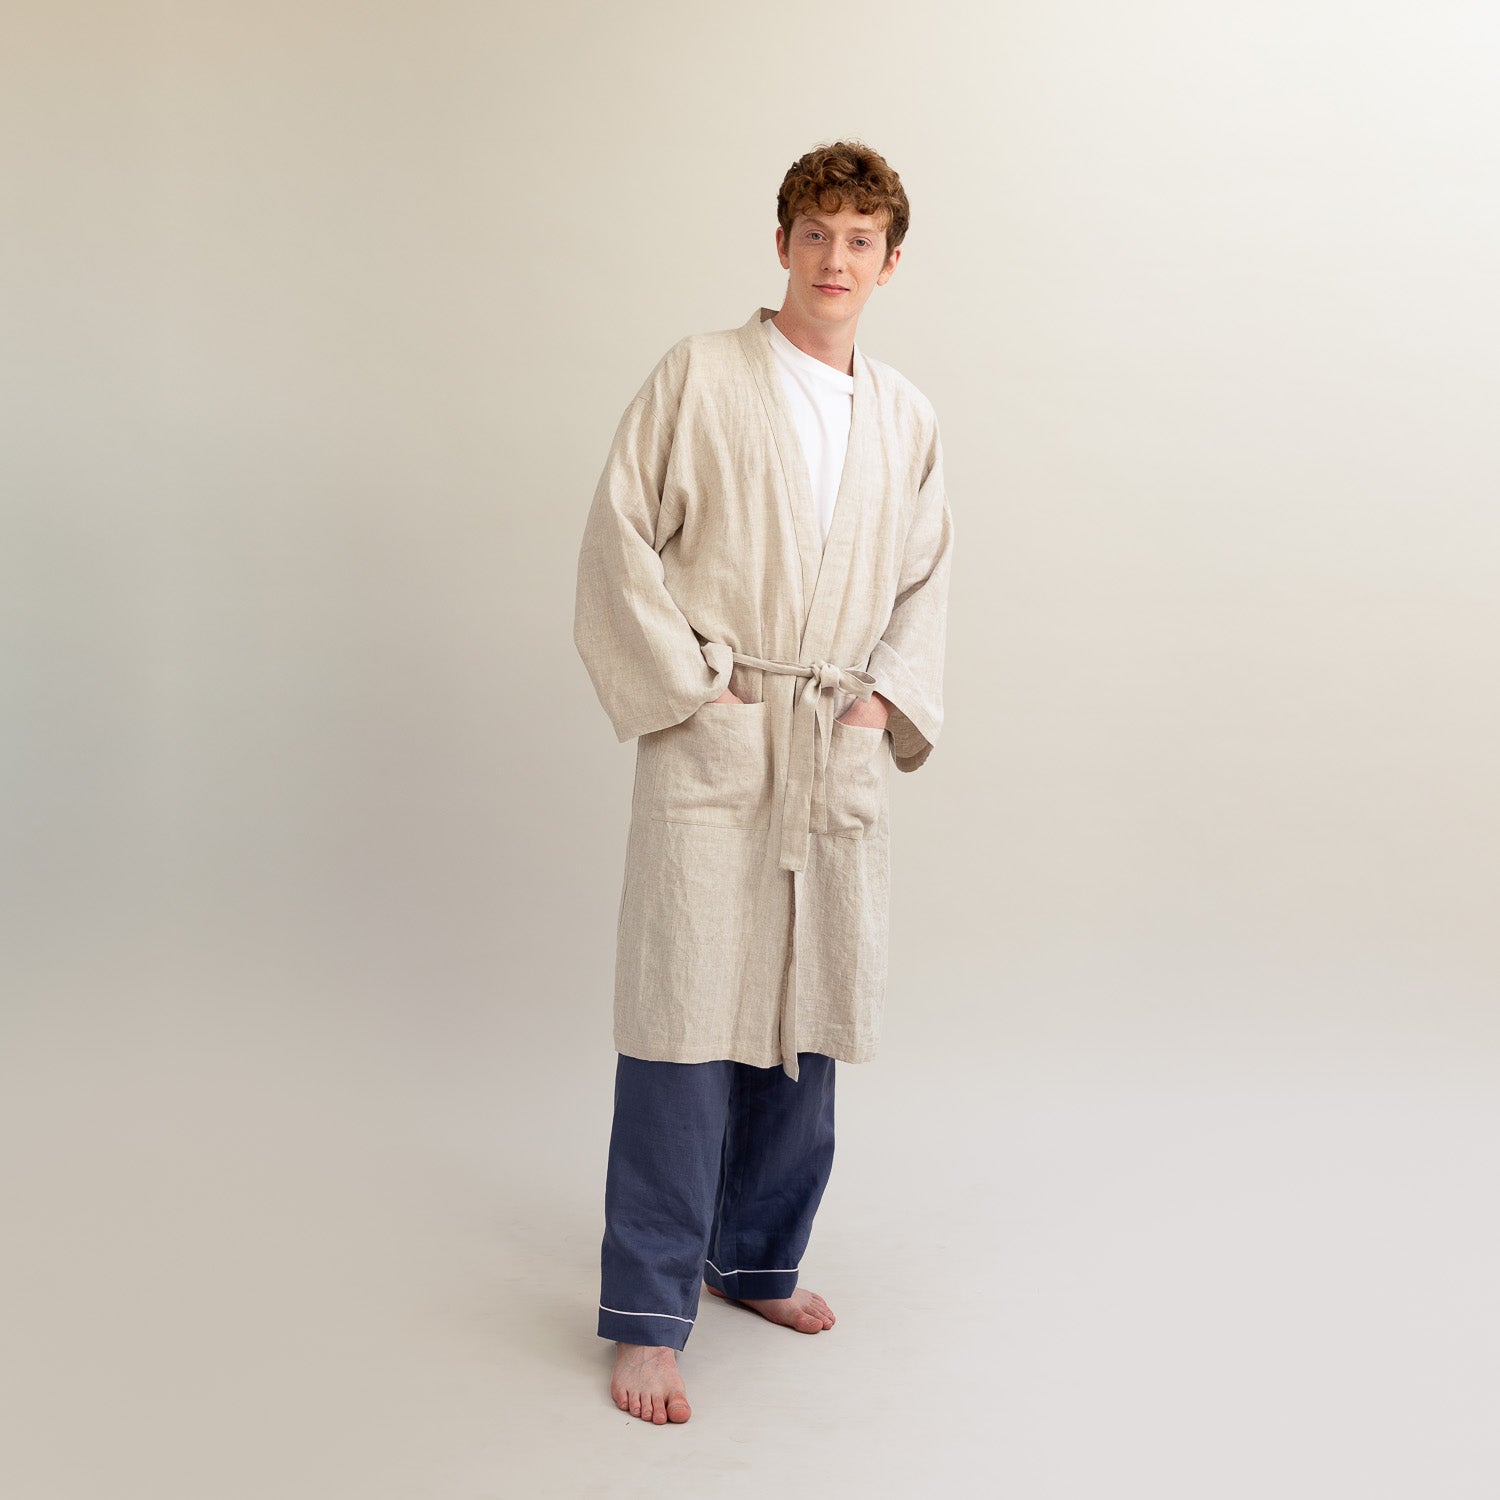 Women's clothing : Natural colour Linen ROBE, woman's robe, linen bath robe,  summer dress